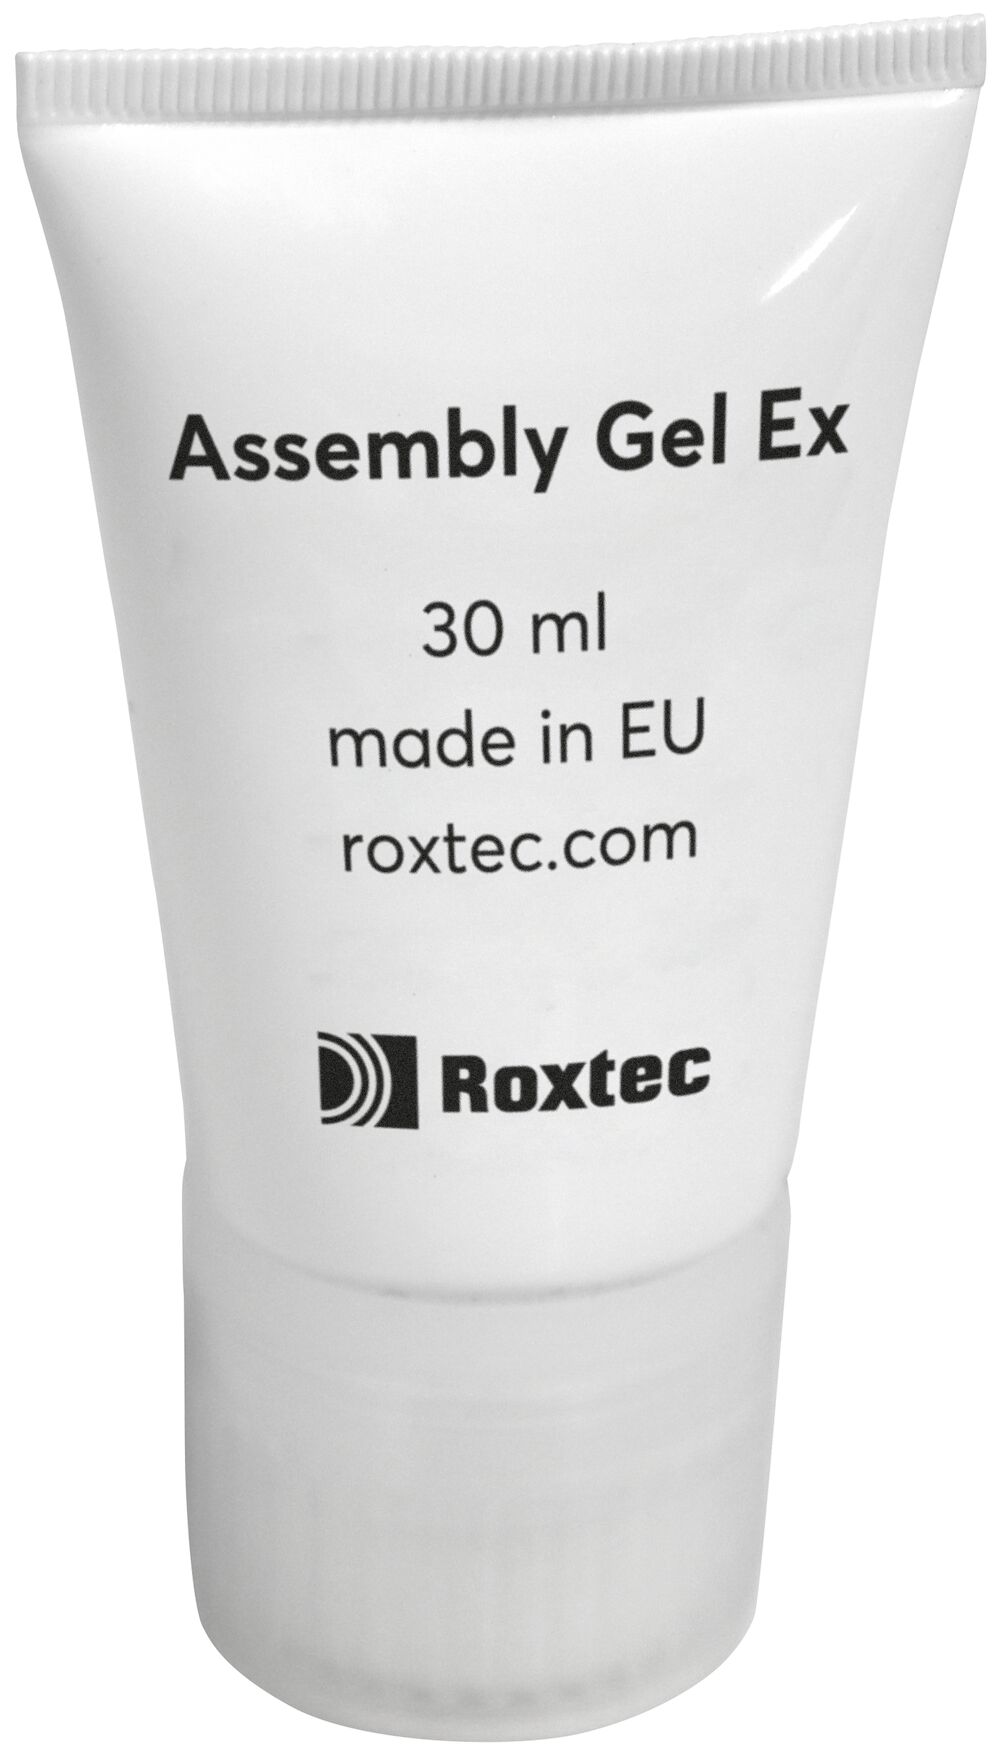 Assembly Gel Ex